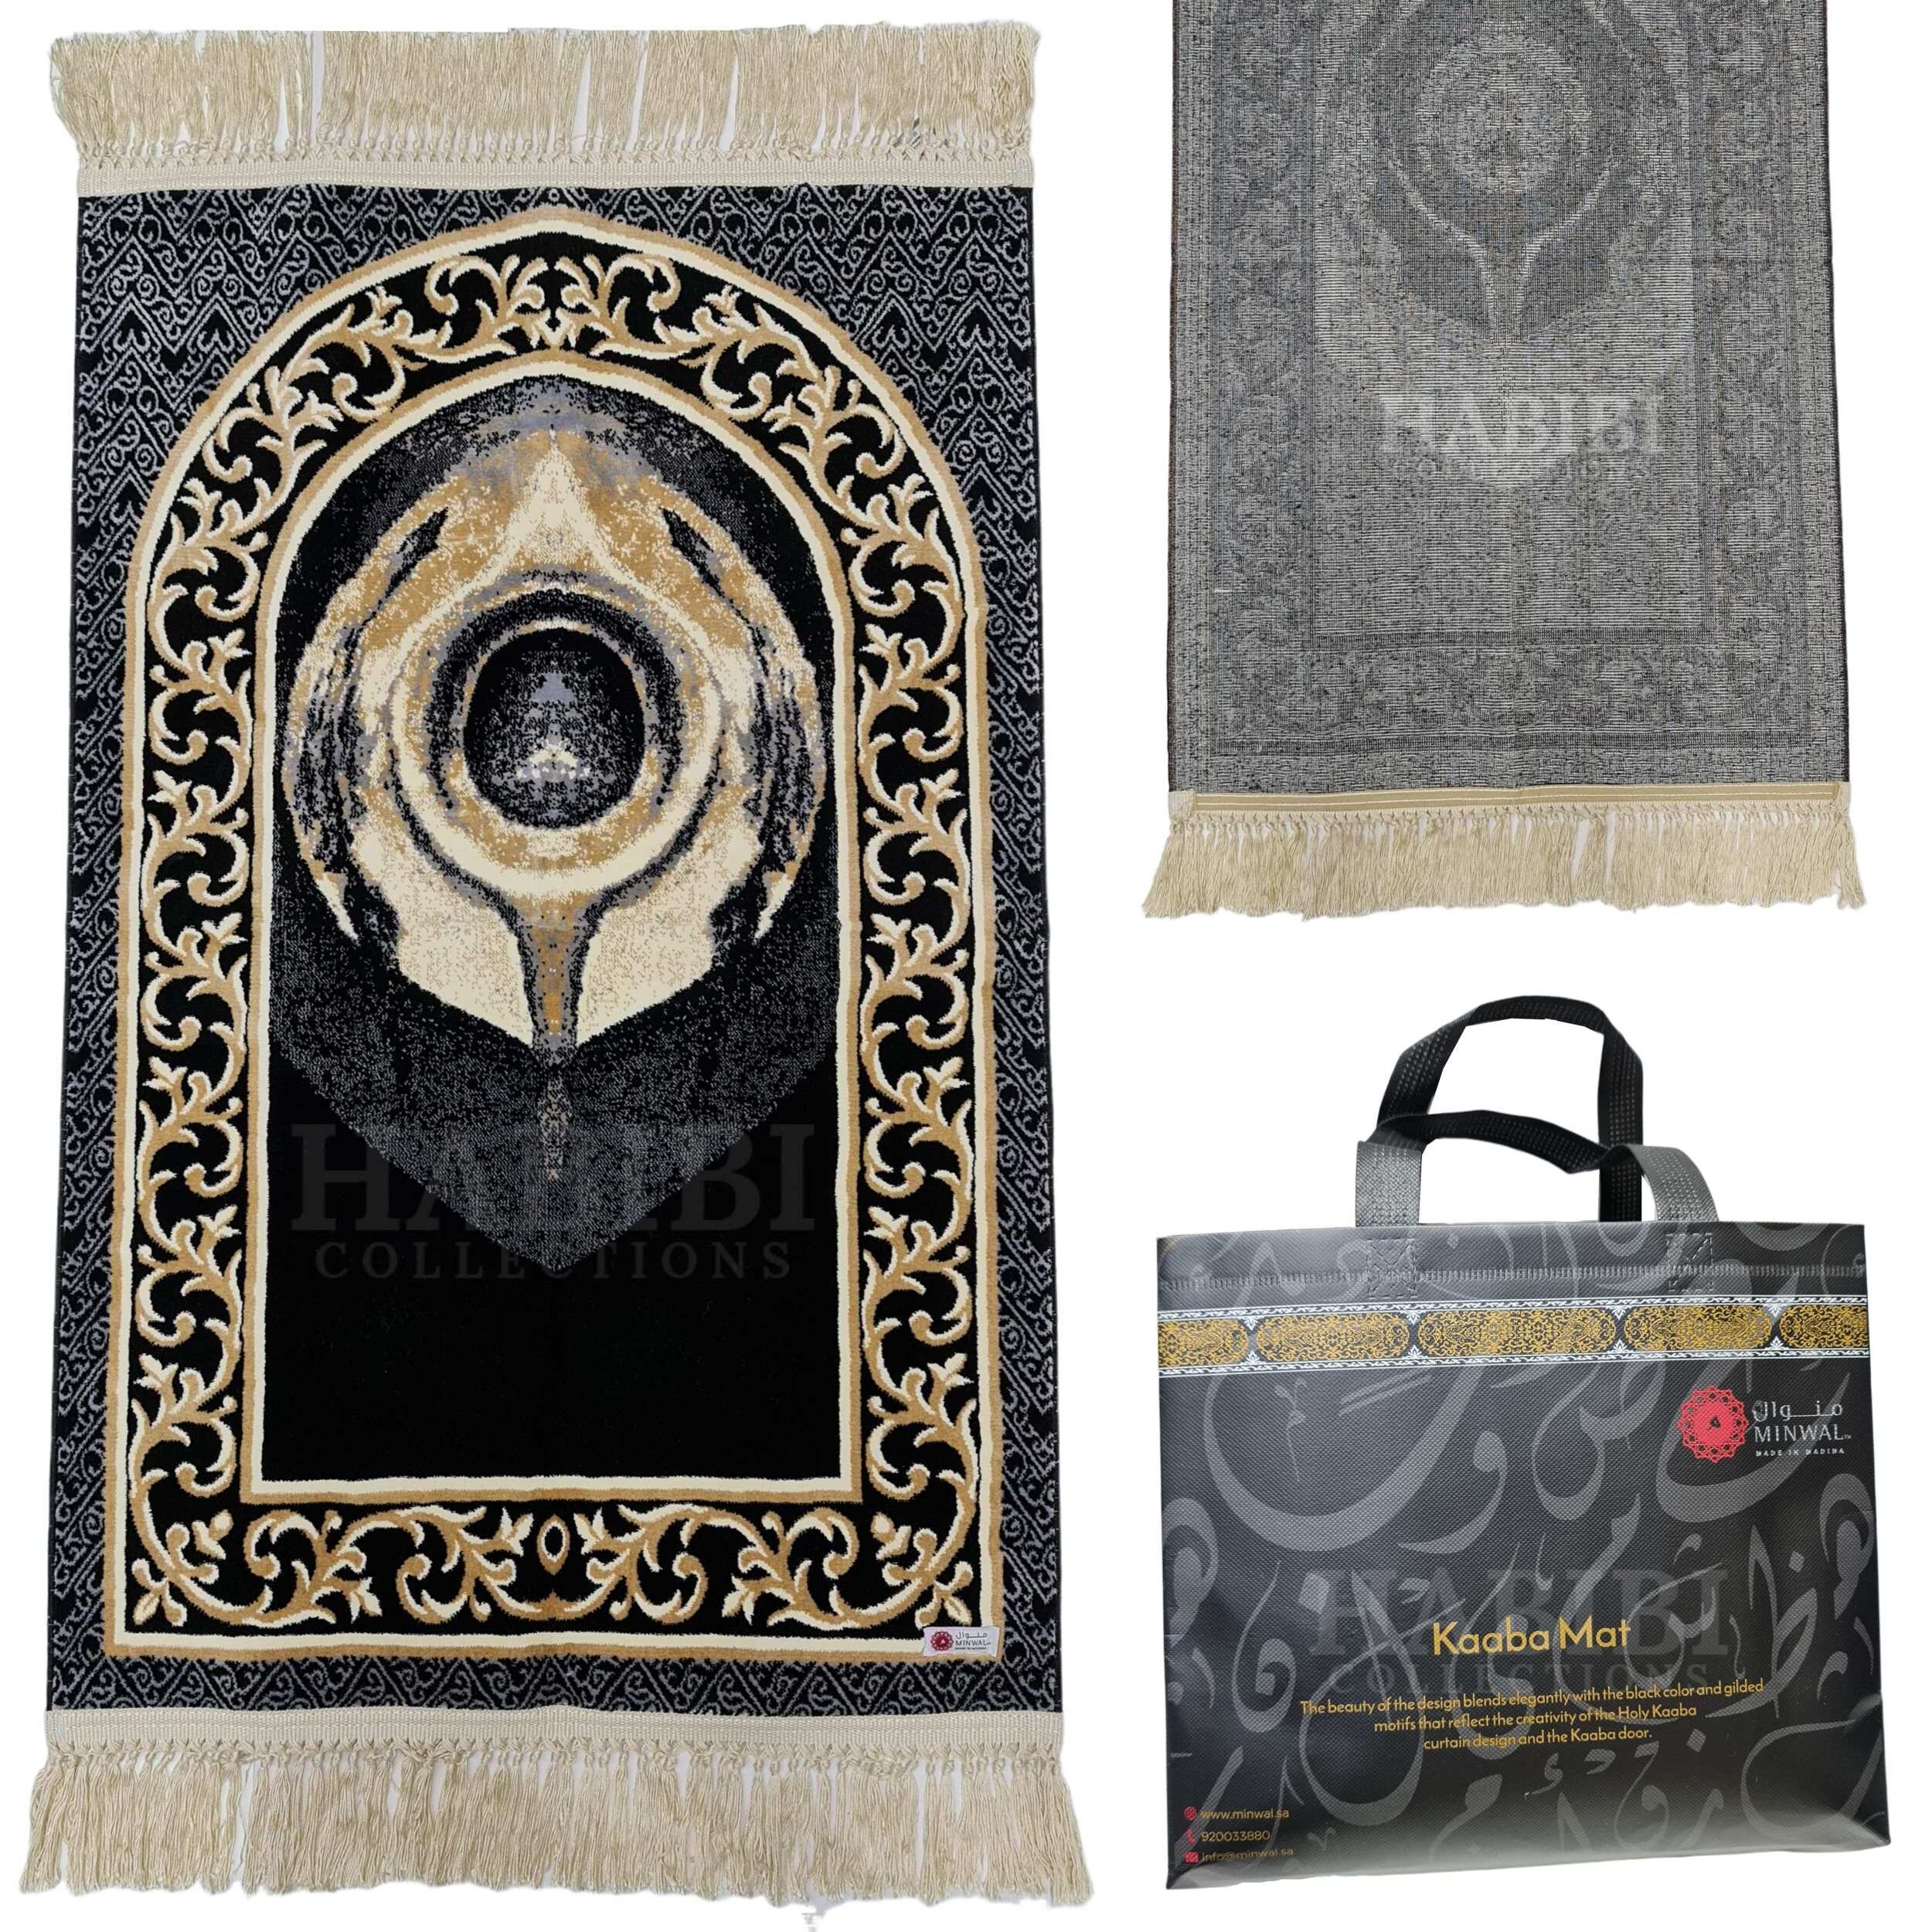 marionet ONWAAR Kwijtschelding Premium Hajar Aswad Black Stone Kaaba Islamic Prayer Mat 1050g - Etsy